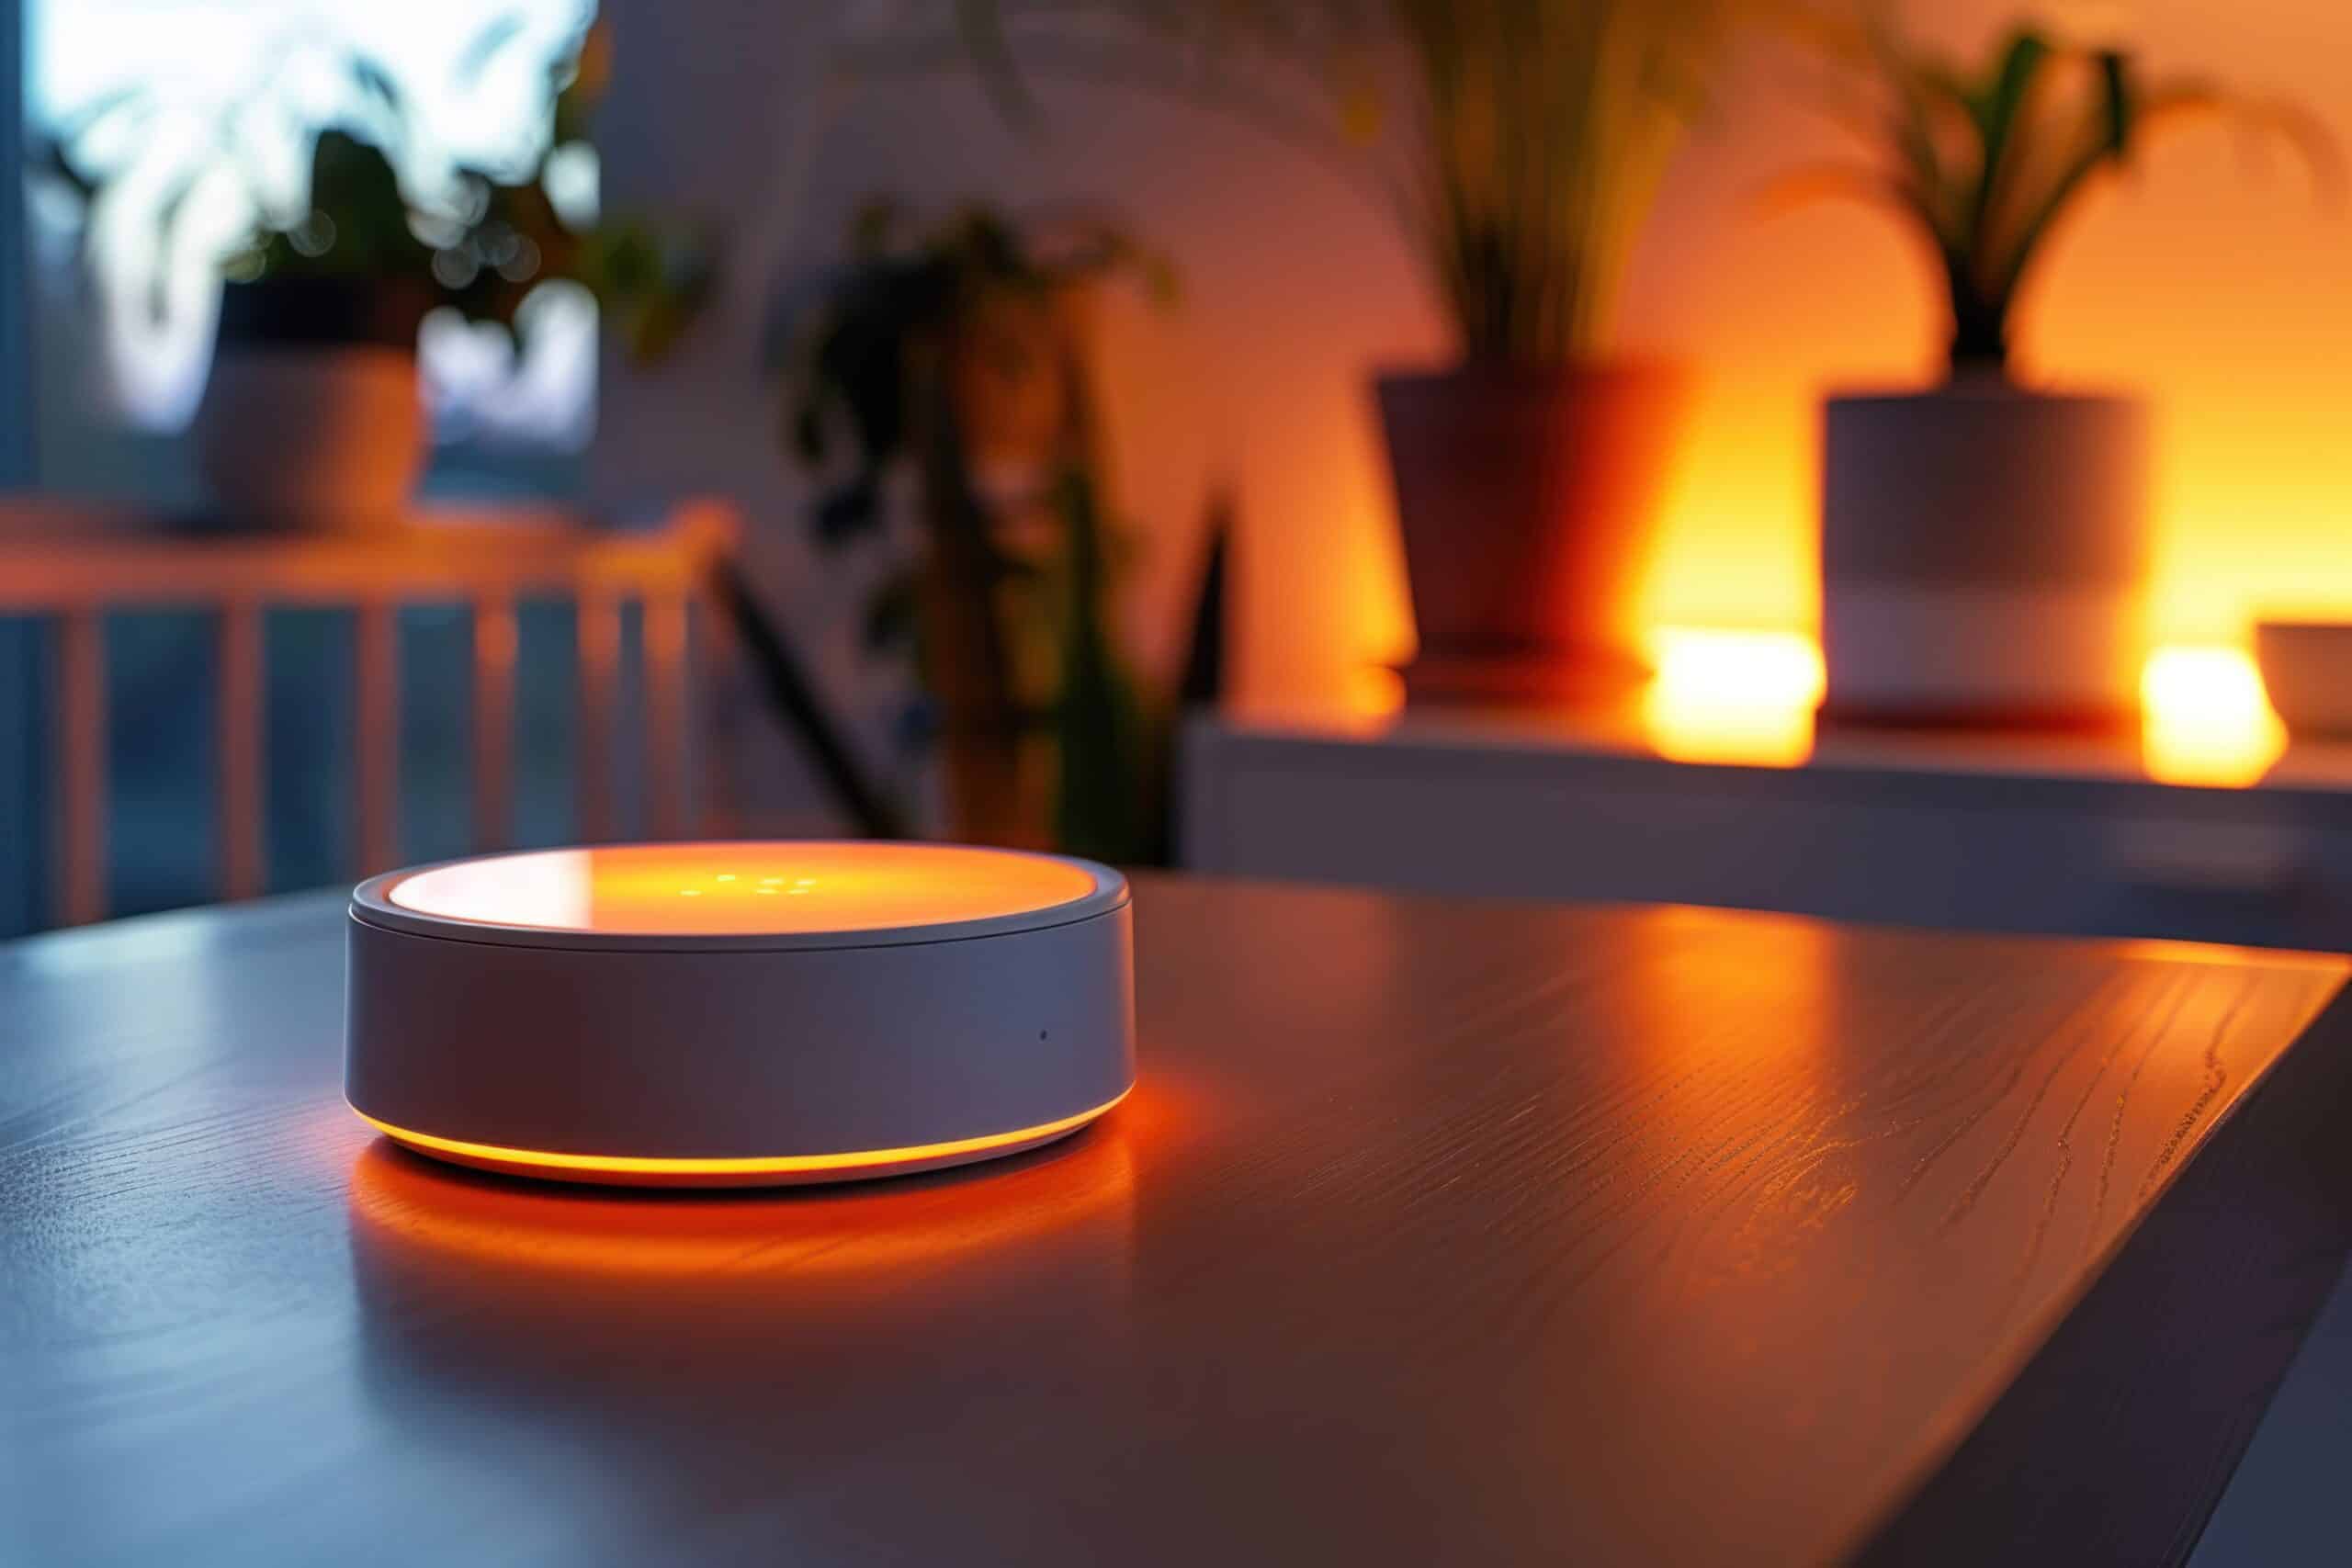 www.appr.com : Can I Use Alexa Remote For Smart Home?